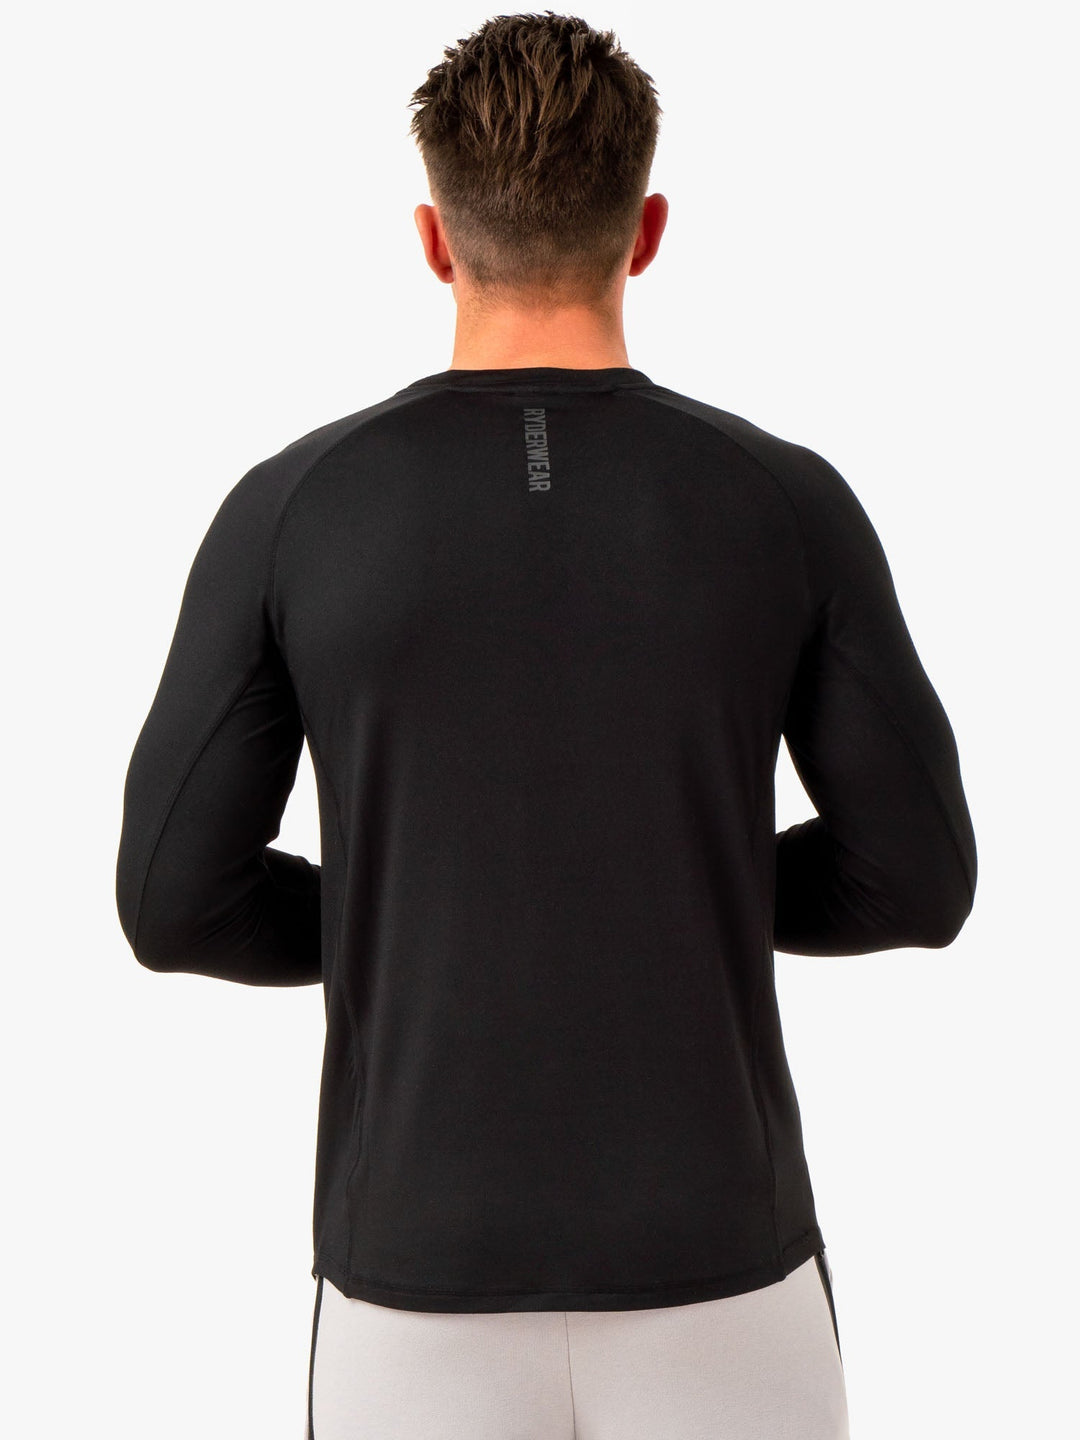 Enhance Long Sleeve Training Top - Black Clothing Ryderwear 